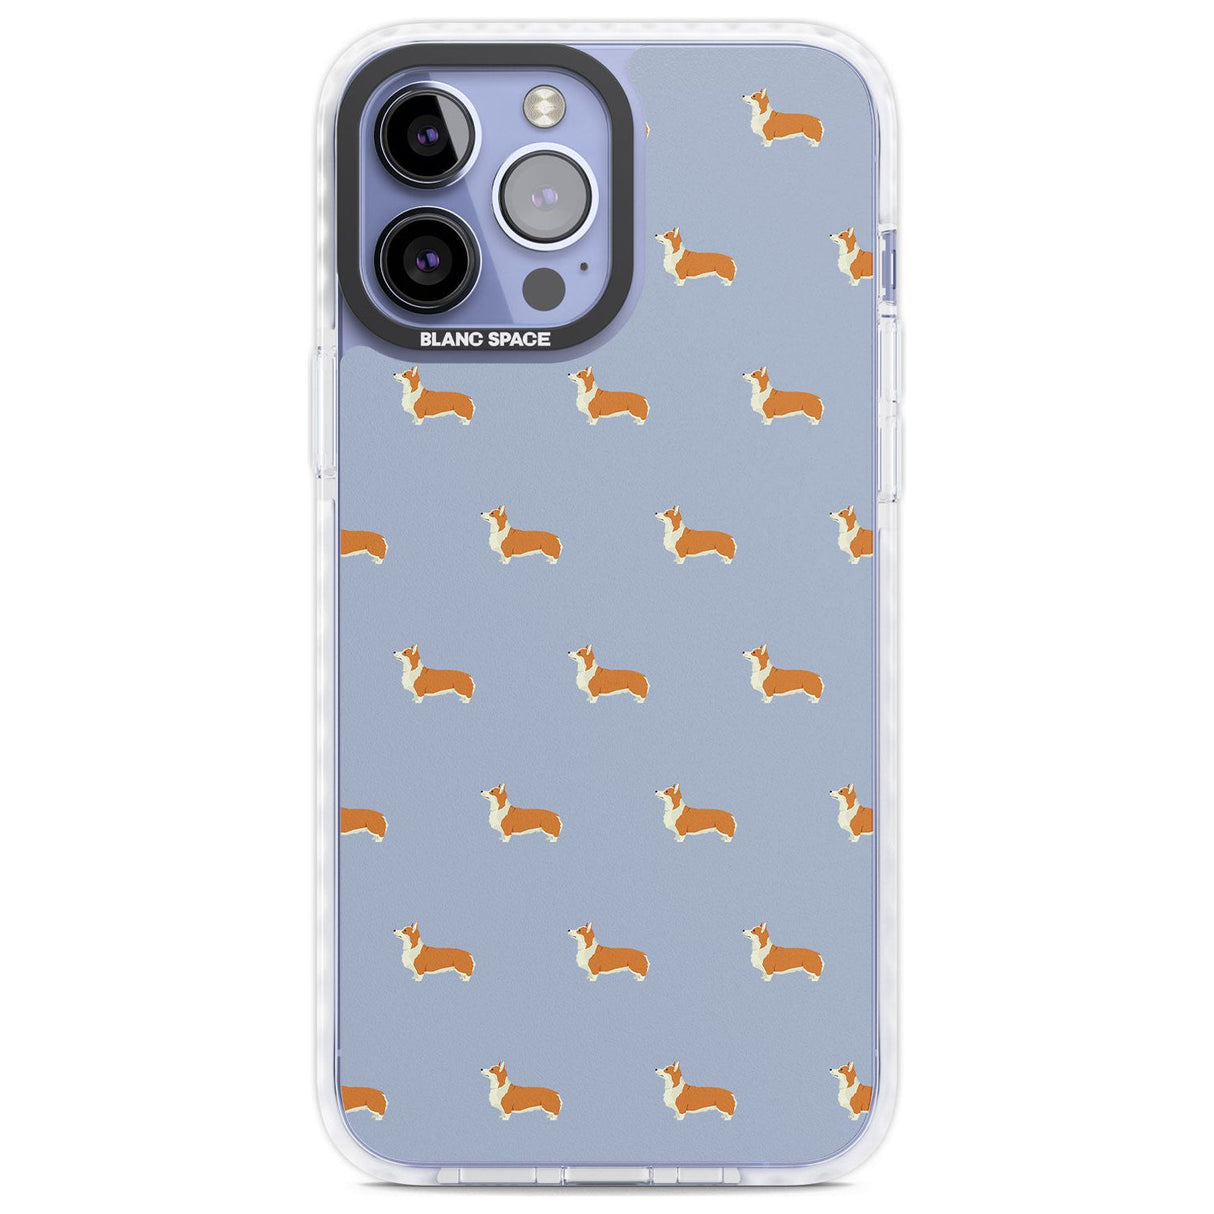 Pembroke Welsh Corgi Dog Pattern Phone Case iPhone 13 Pro Max / Impact Case,iPhone 14 Pro Max / Impact Case Blanc Space